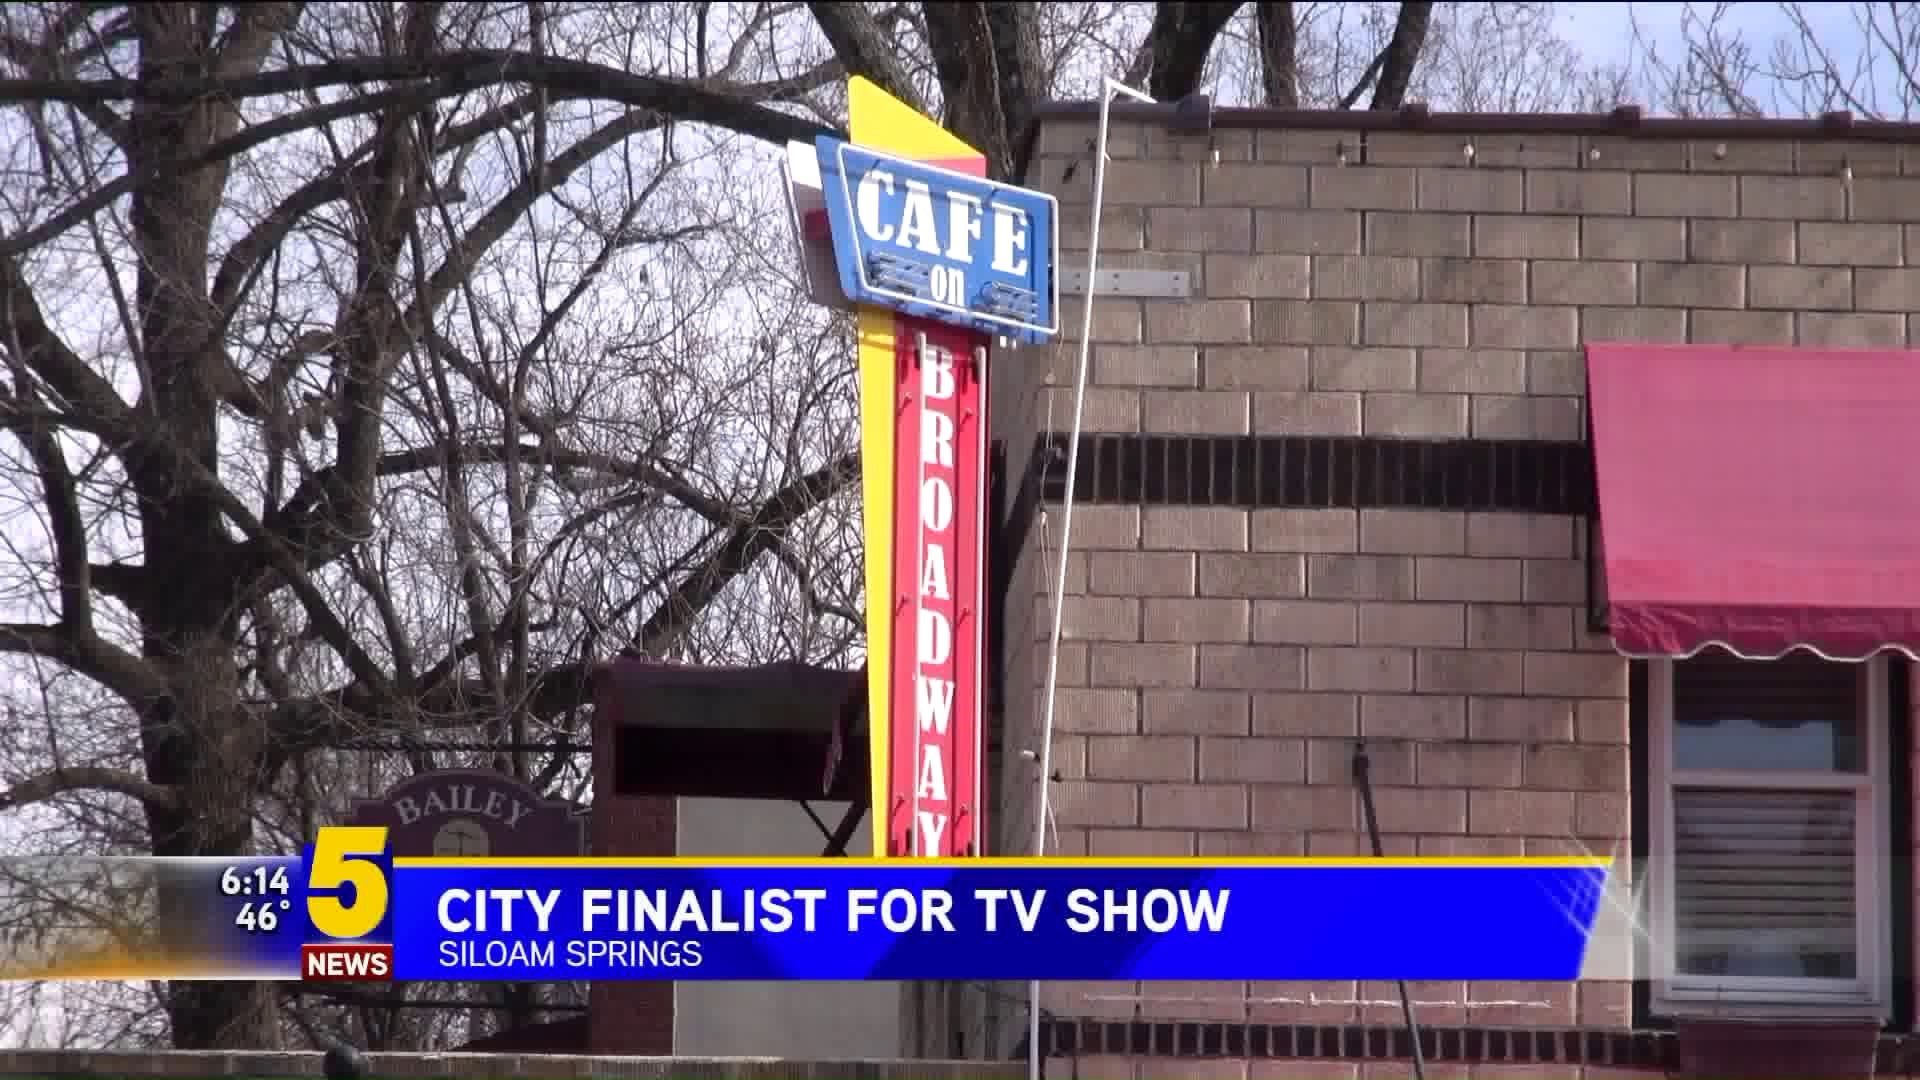 City Finalist For TV Show